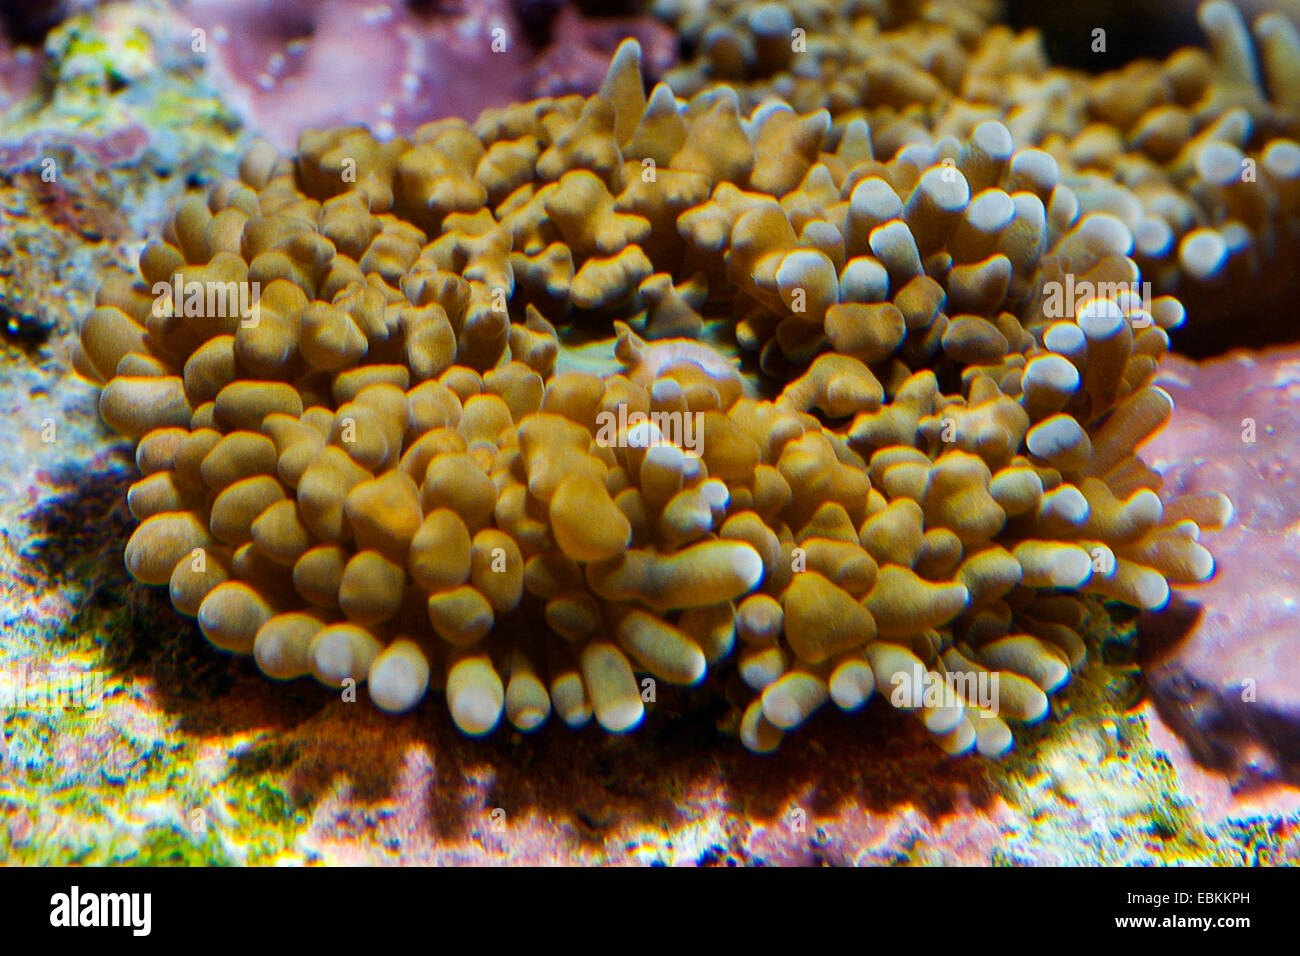 Mushroom Anemone (Ricordea spec.), side view Stock Photo